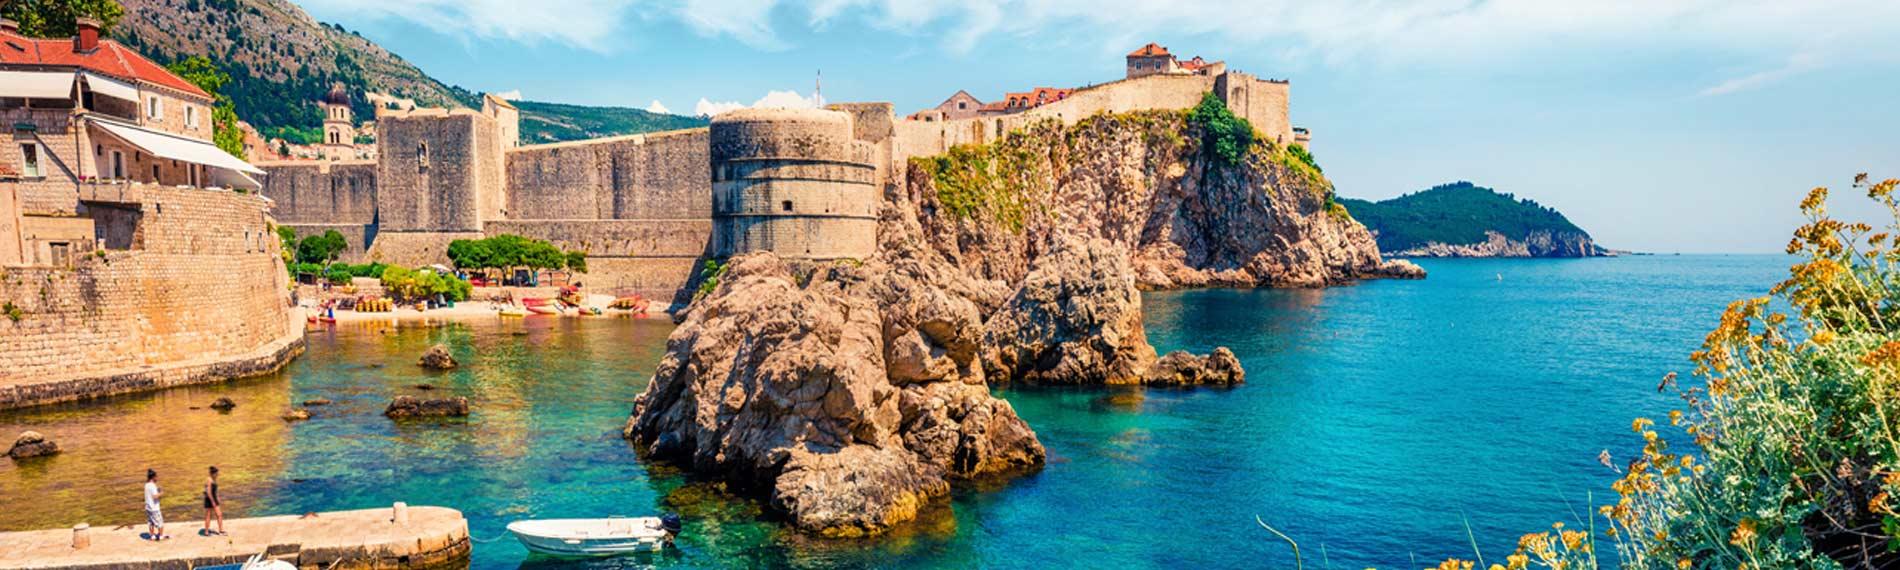 Dubrovnik city breaks